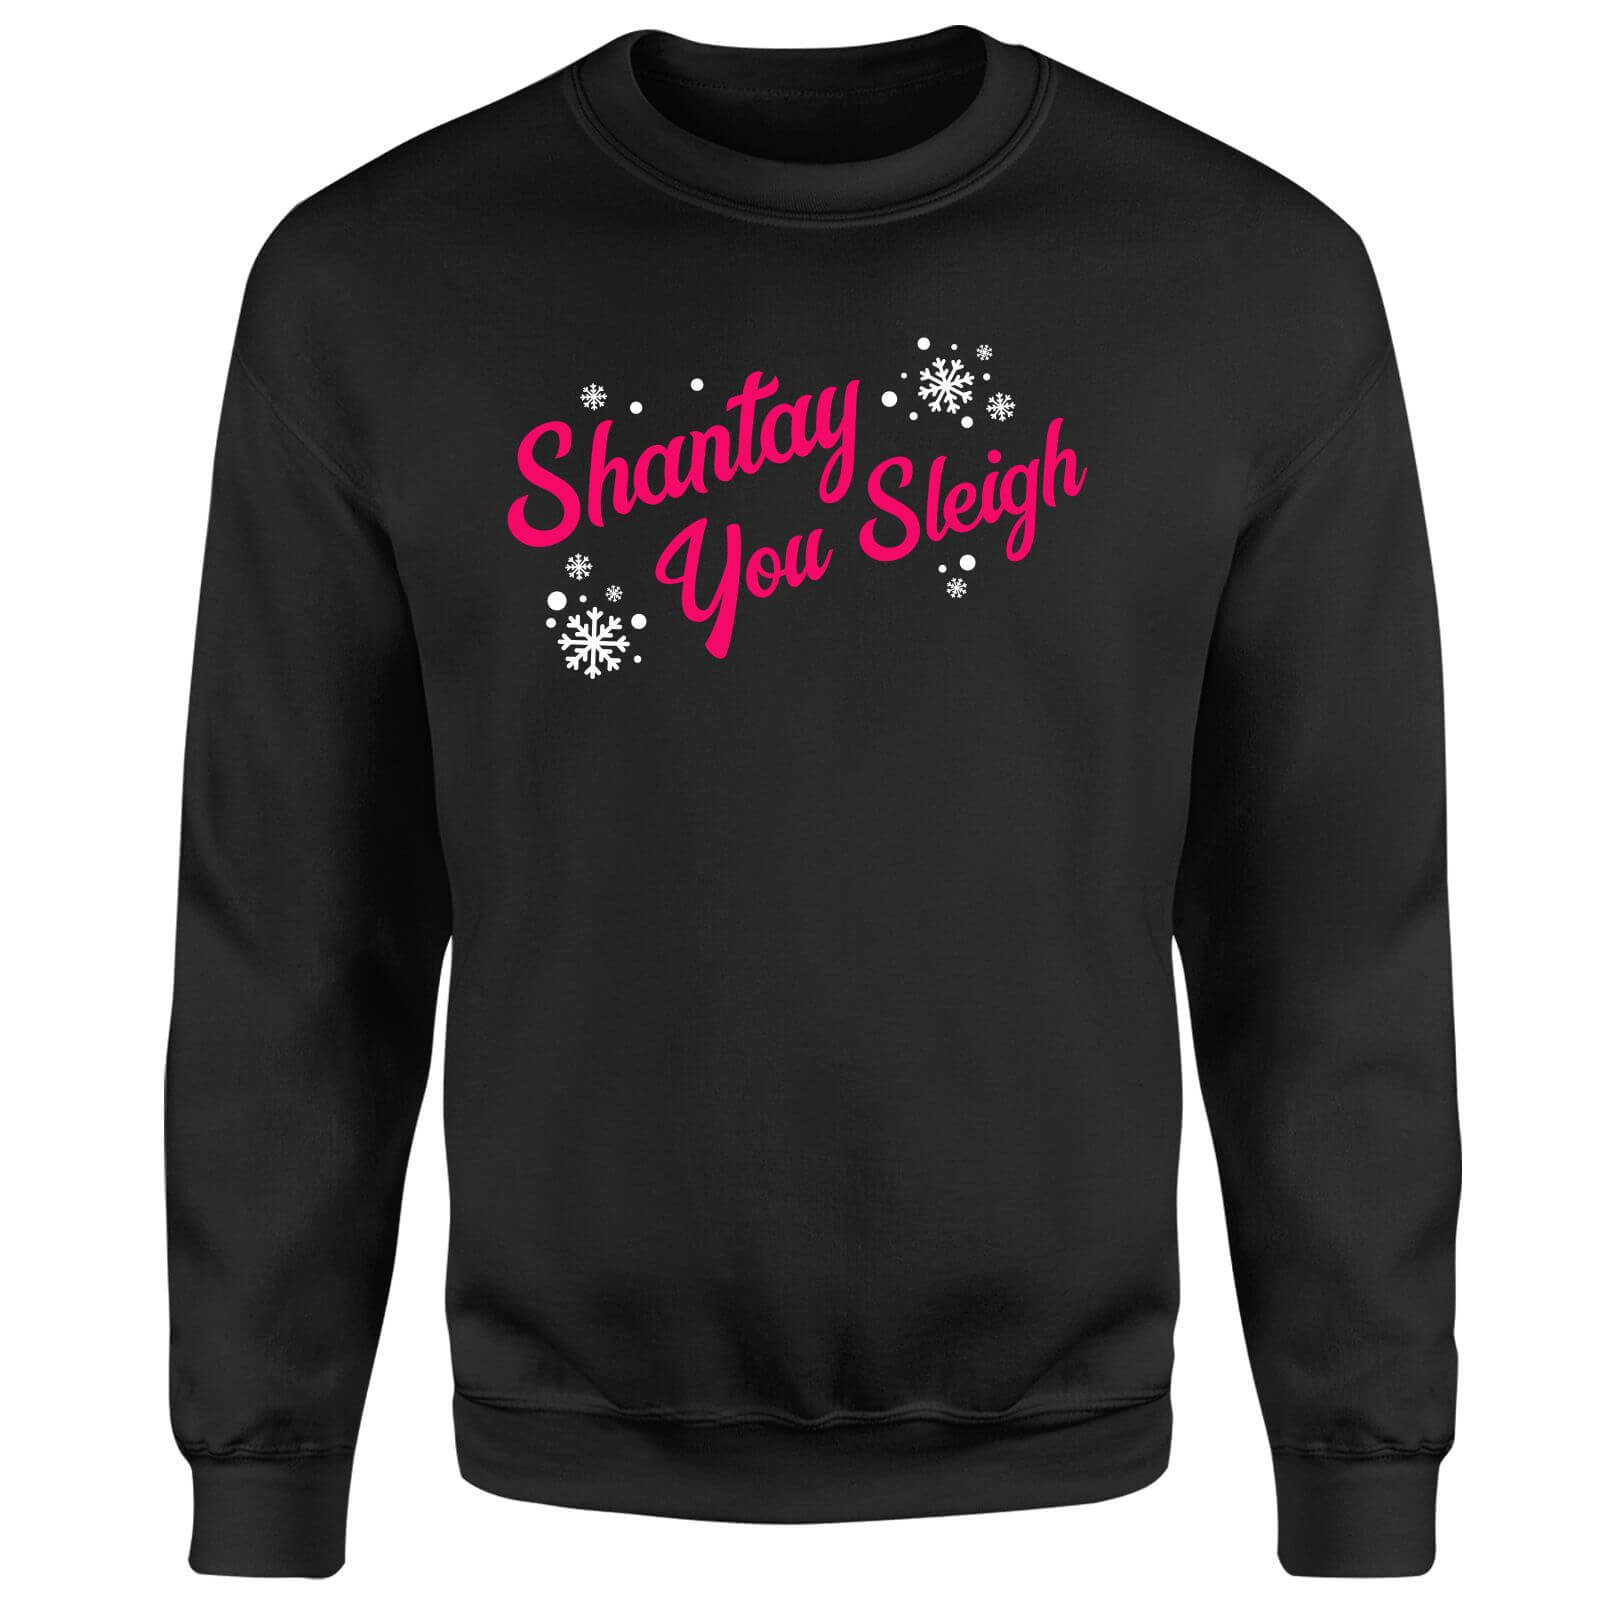 Drag Act Shantay You Sleigh Unisex Sweatshirt - Black - S - Black